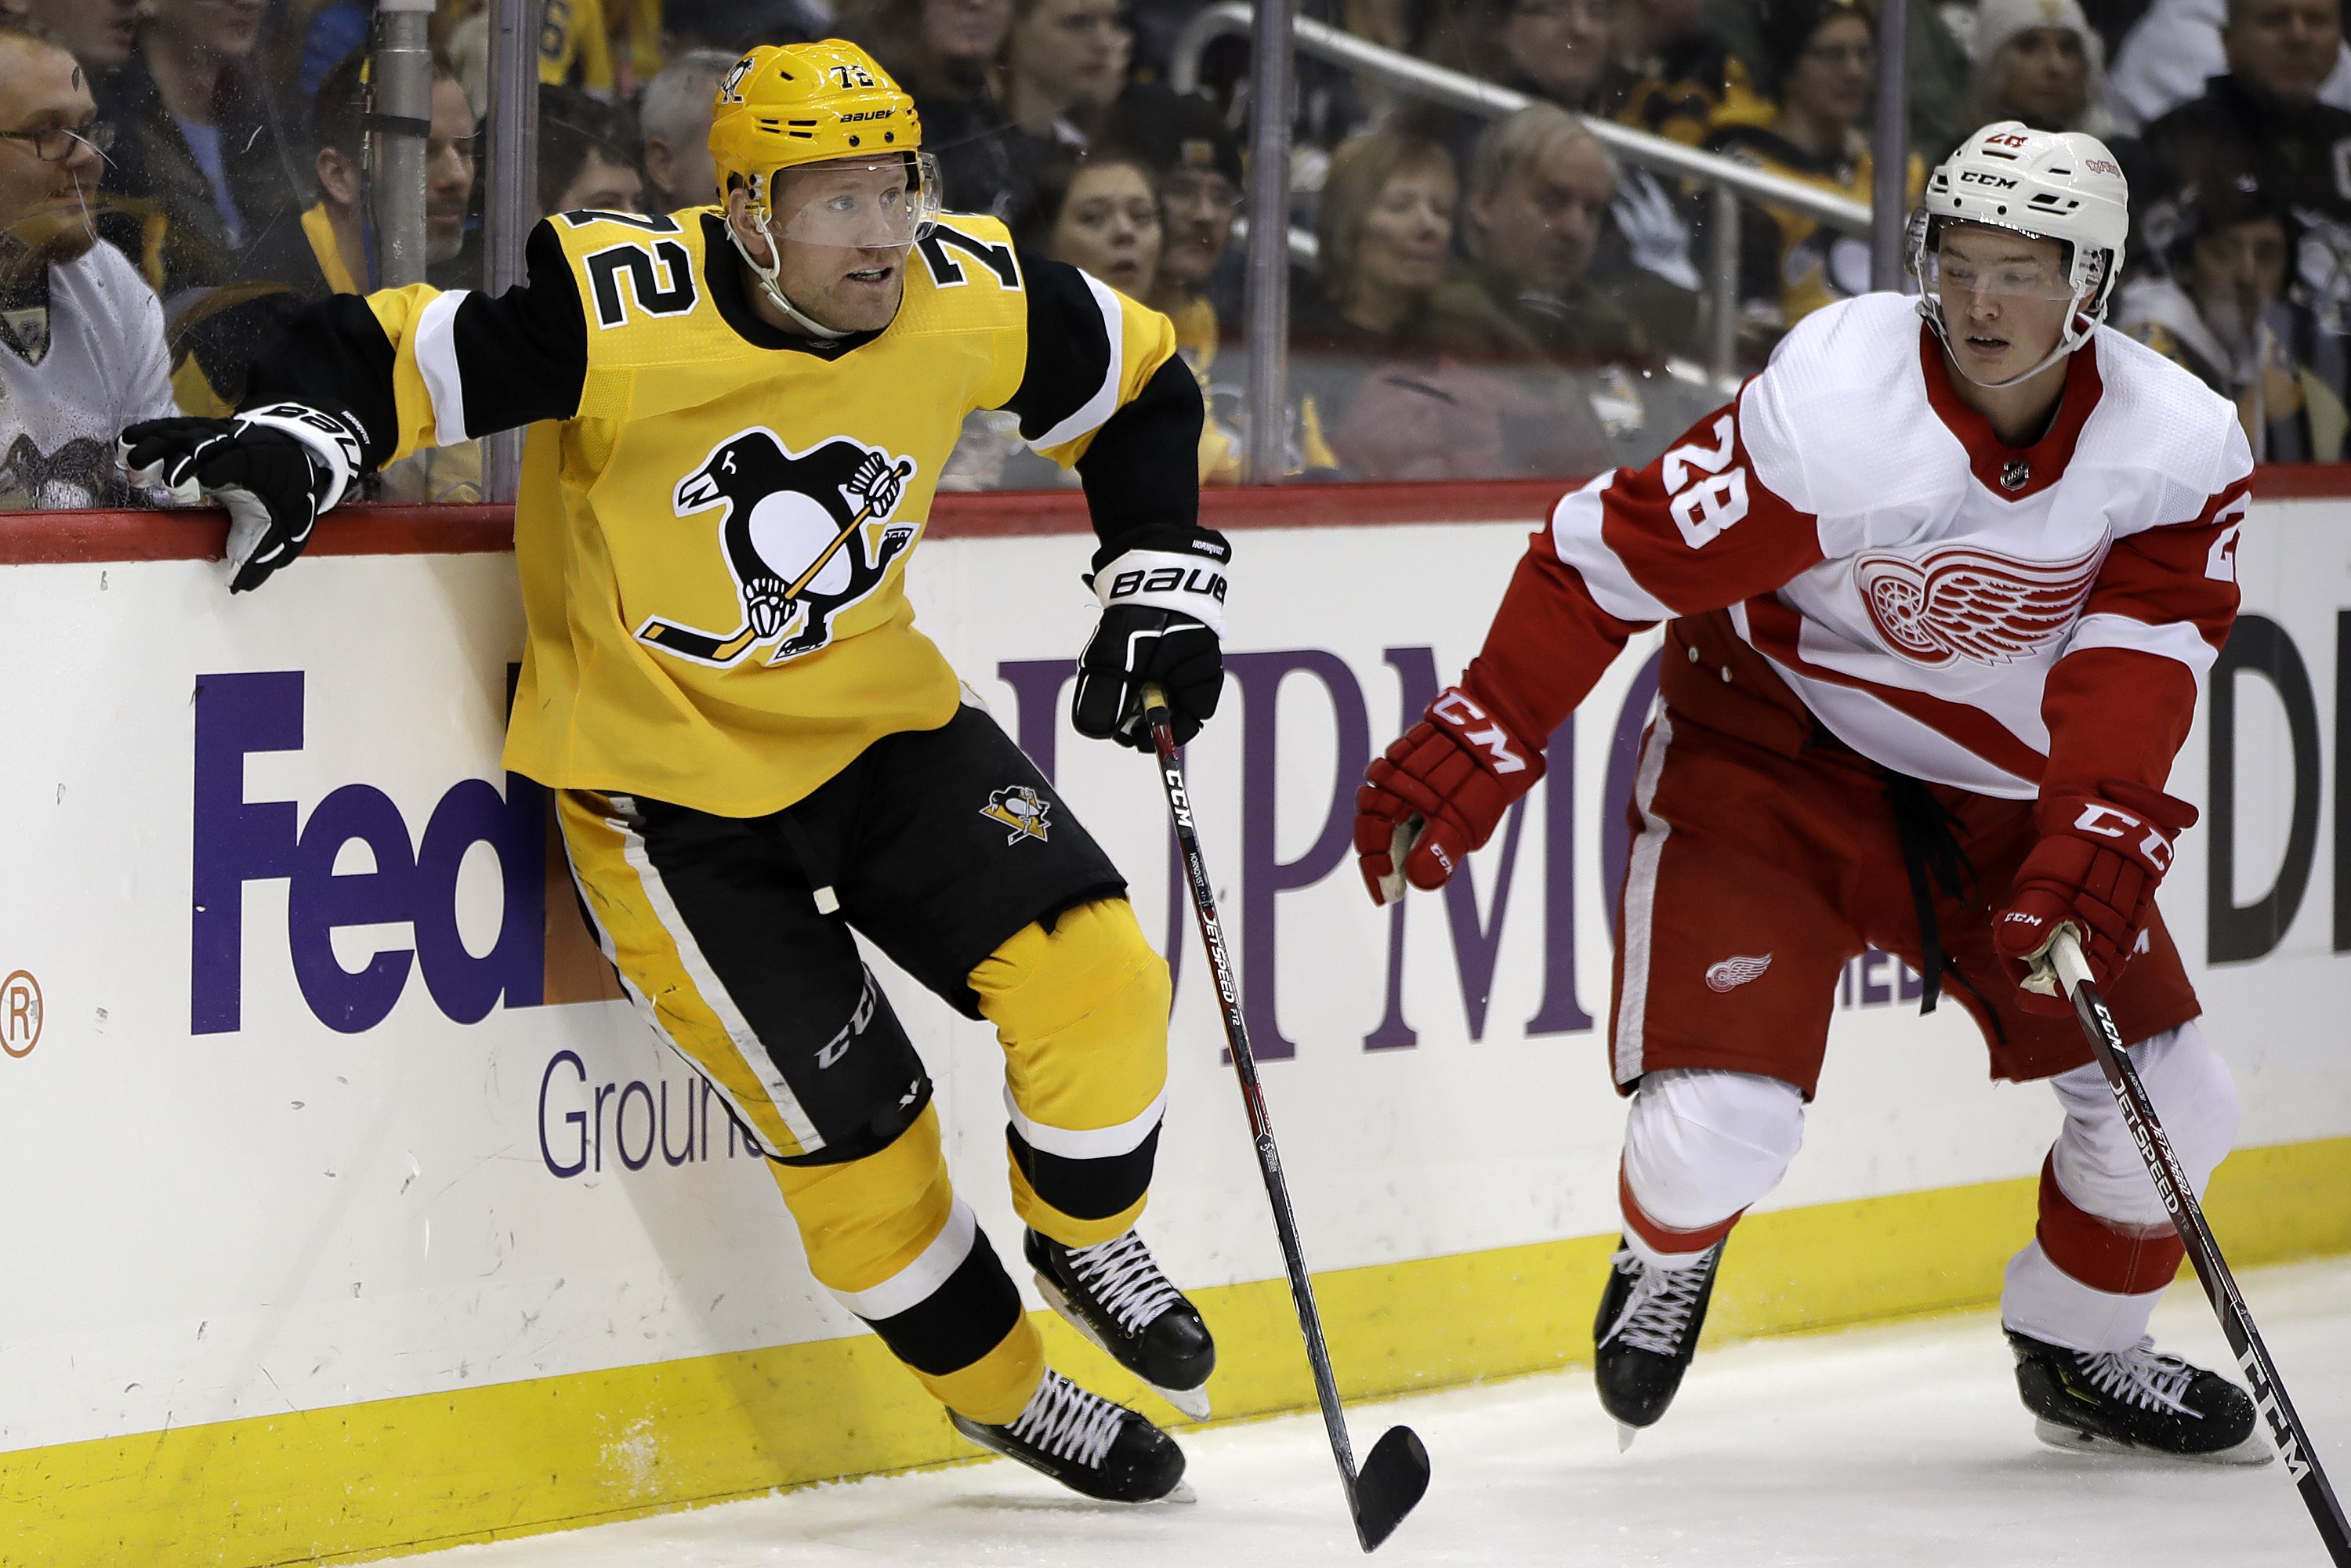 Pittsburgh Penguins share heartfelt statement on Mac Miller's